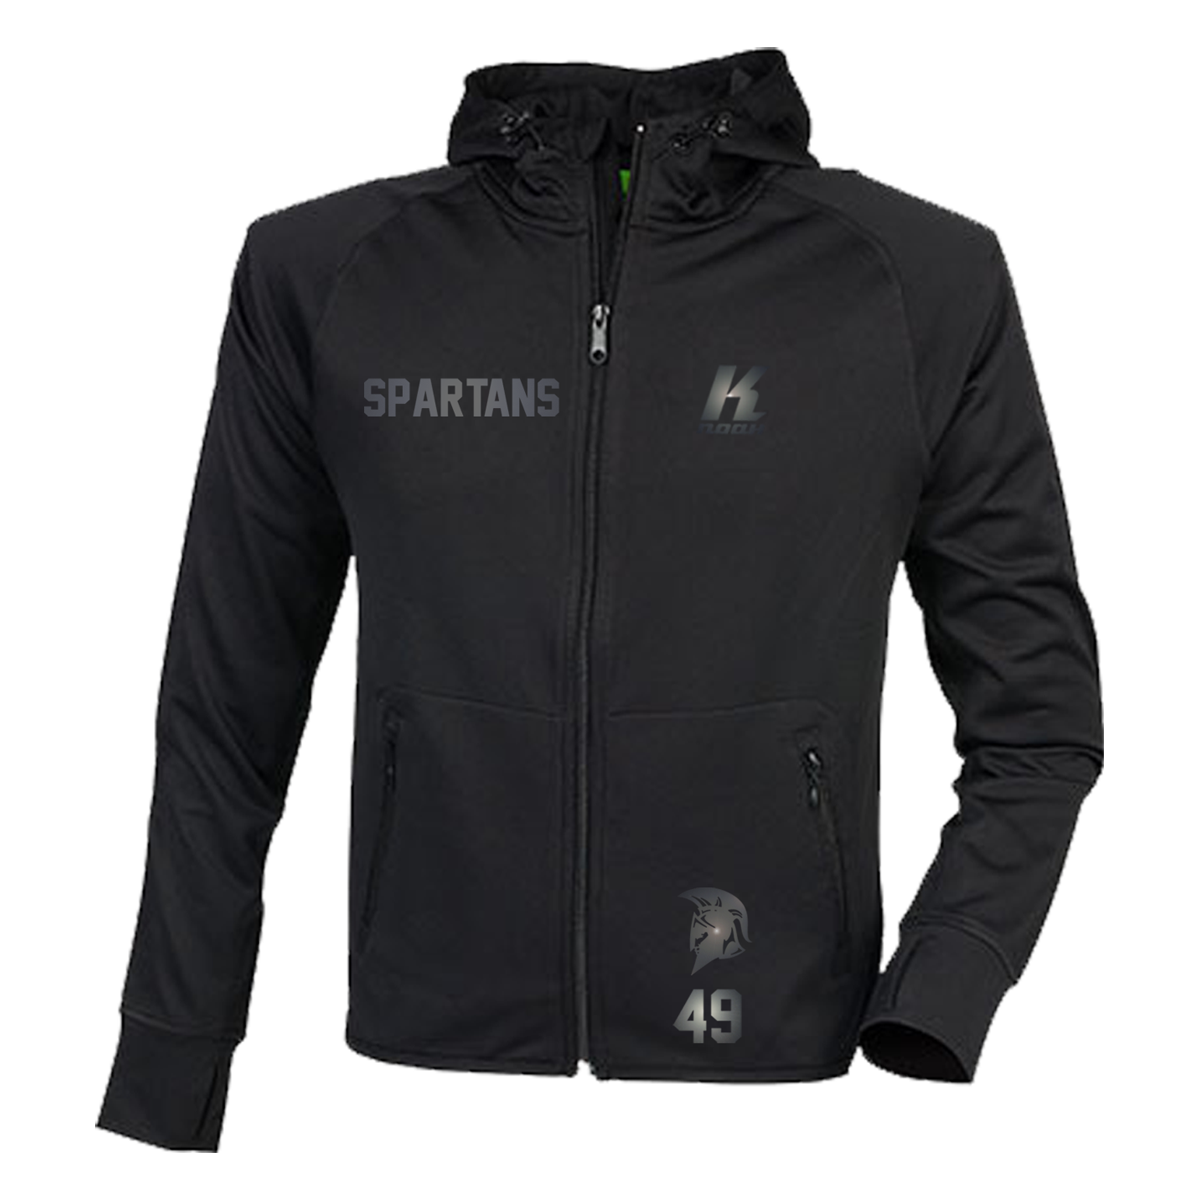 Spartans "Blackline" Zip Hoodie TL550 with Playernumber or Initials